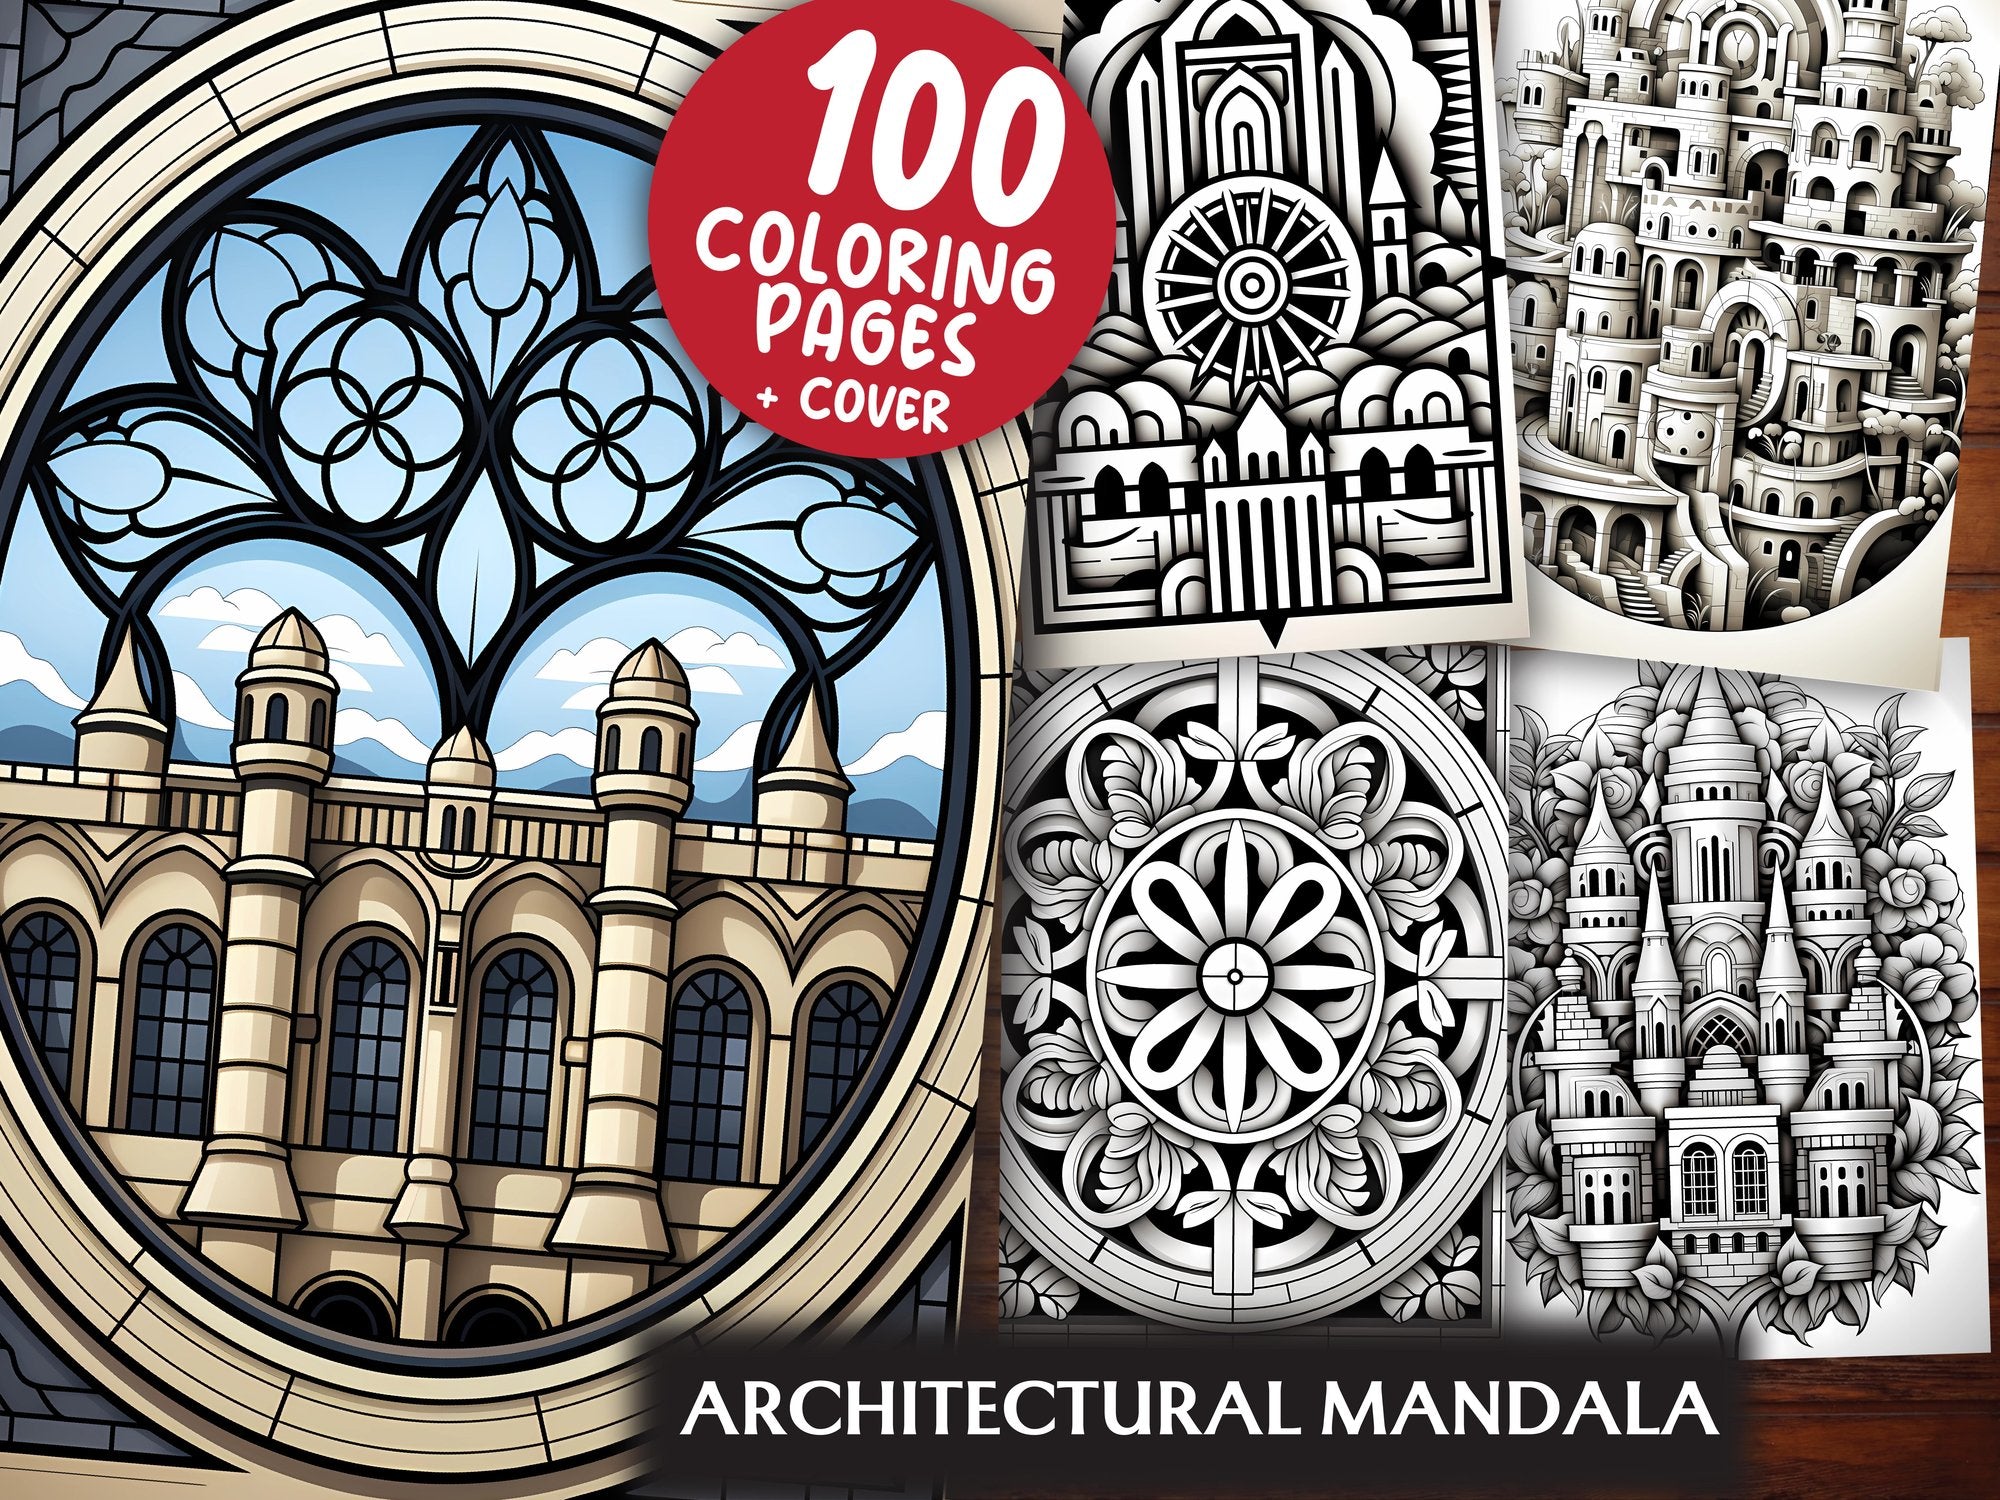 Architectural Mandala Coloring Books - CraftNest